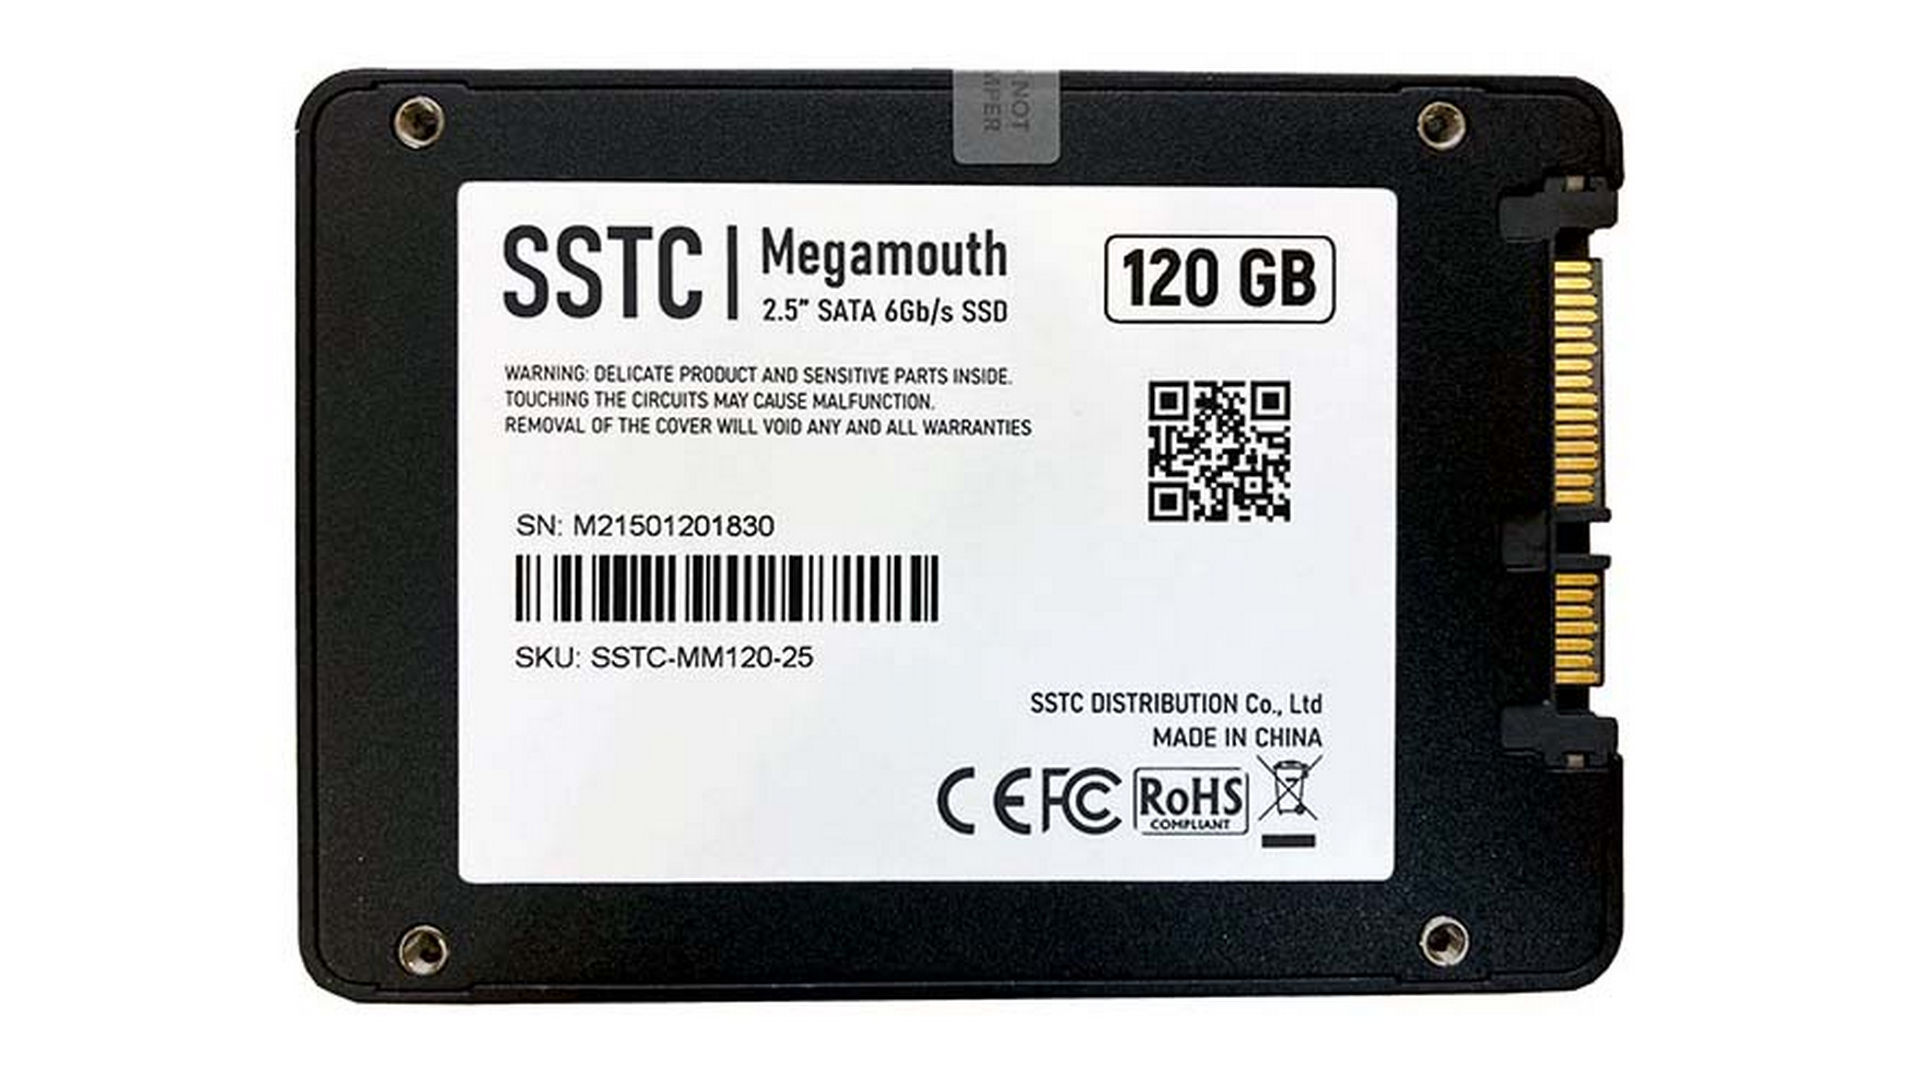 Ổ cứng SSD SSTC 120GB Megamouth (Sata III | SSTC-MM120-25)